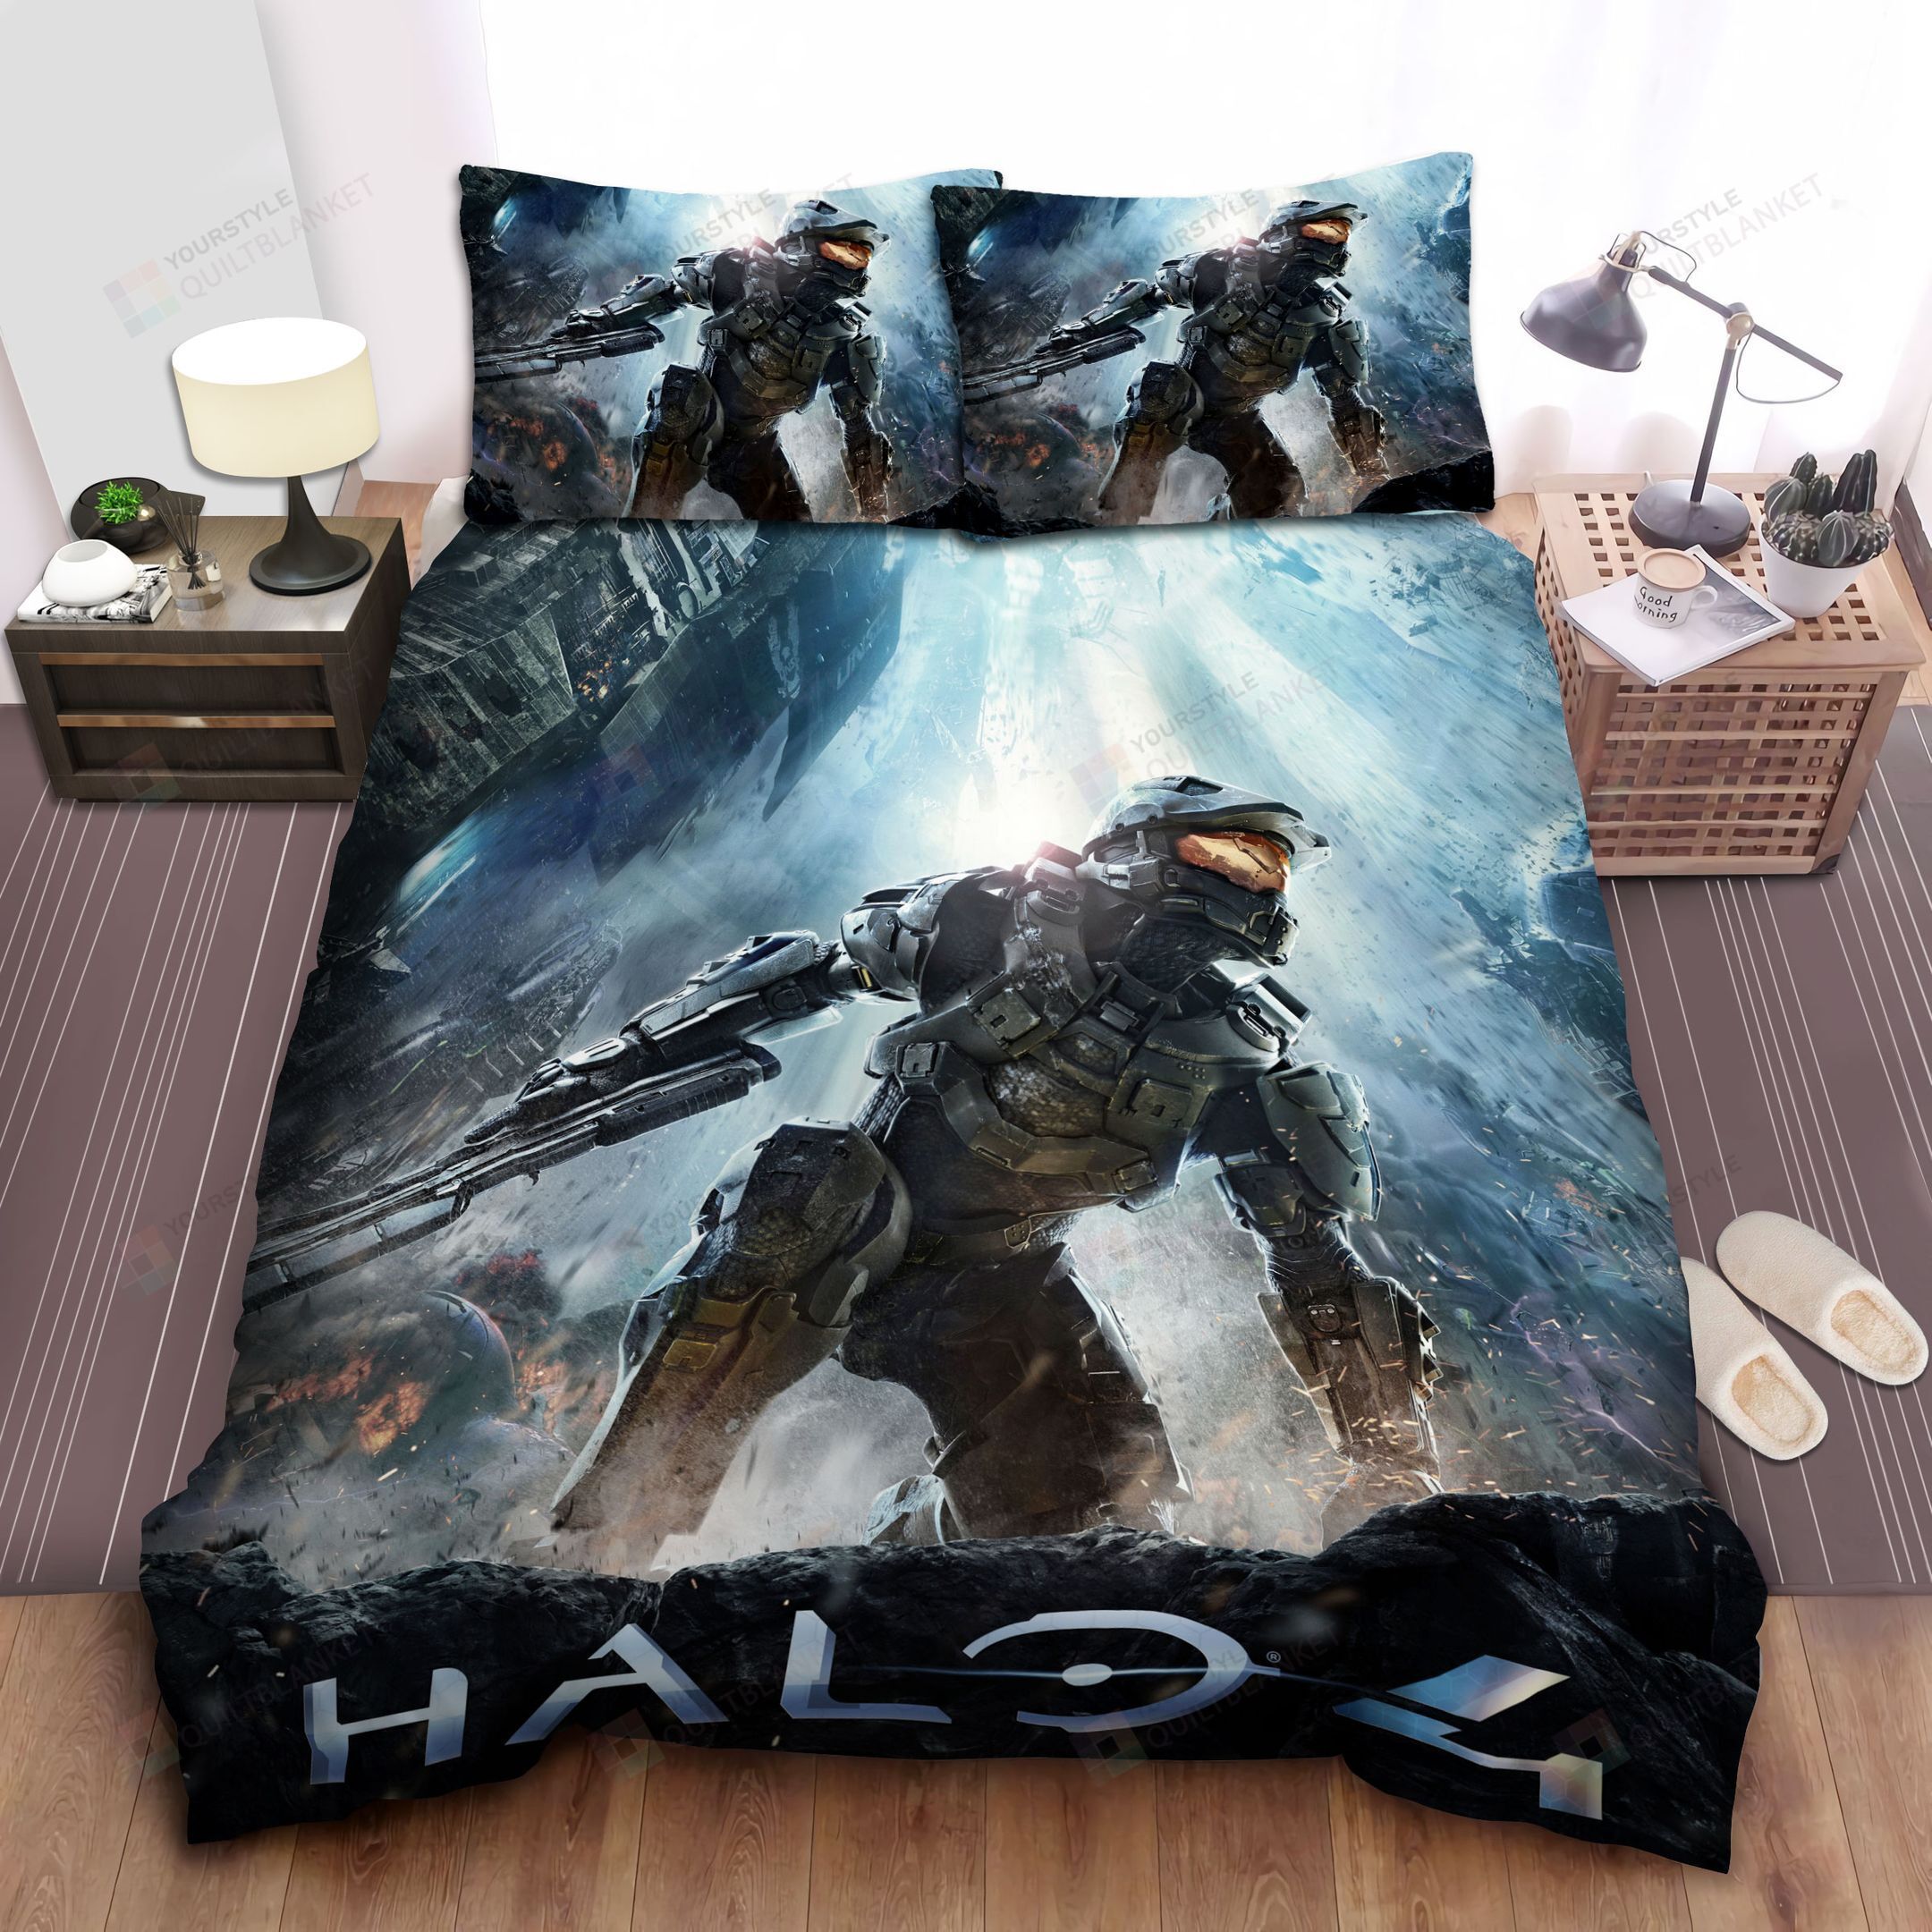 Halo 4 Bed Sheets Spread Comforter Duvet Cover Bedding Sets